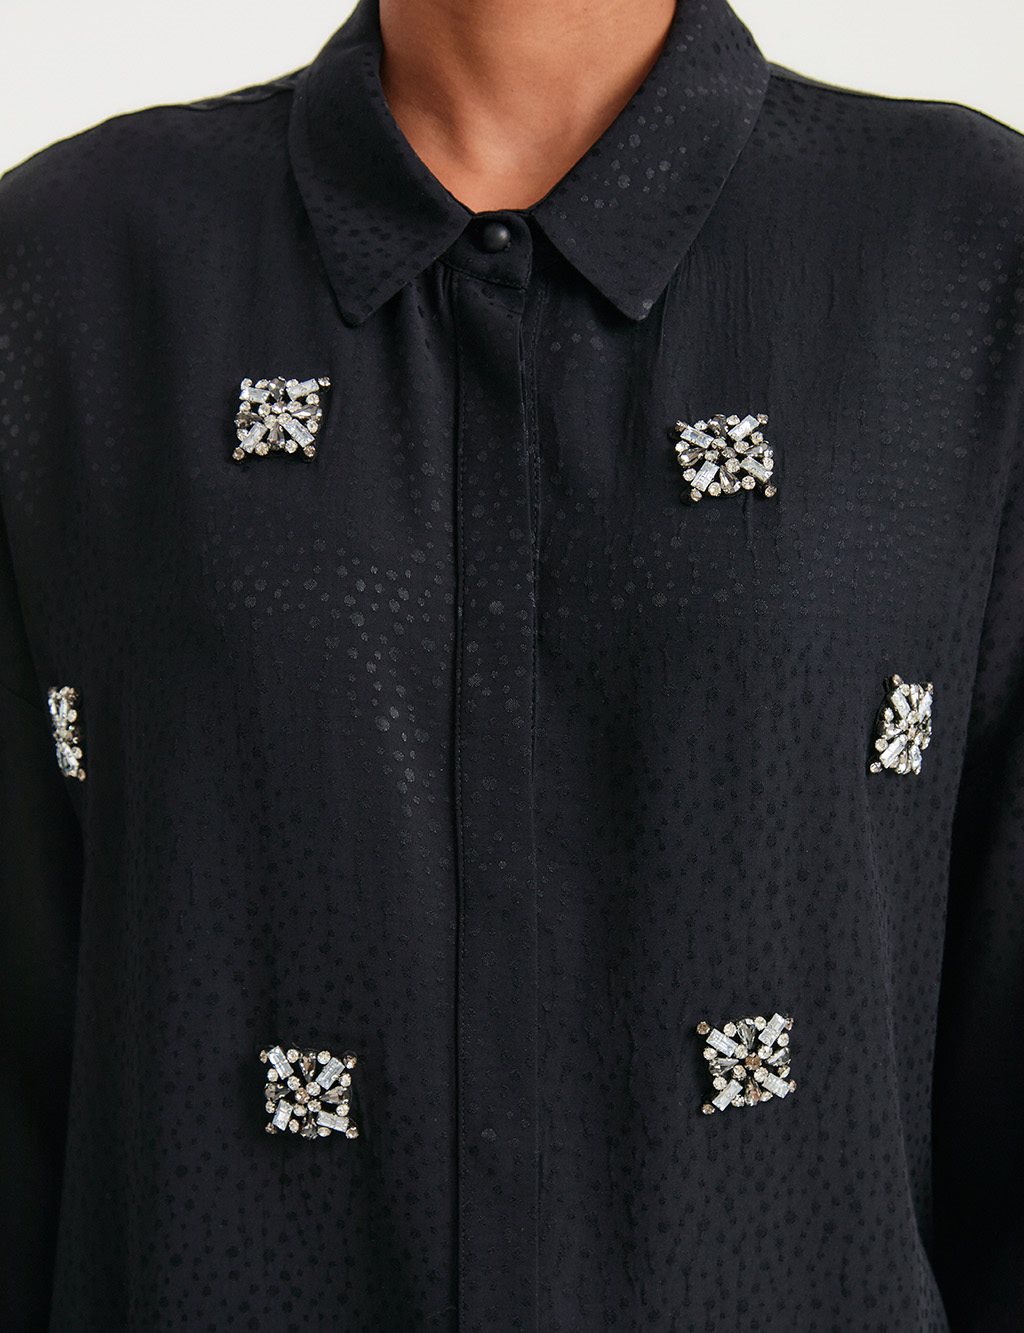 Jacquard Stone Embroidered Shirt Black